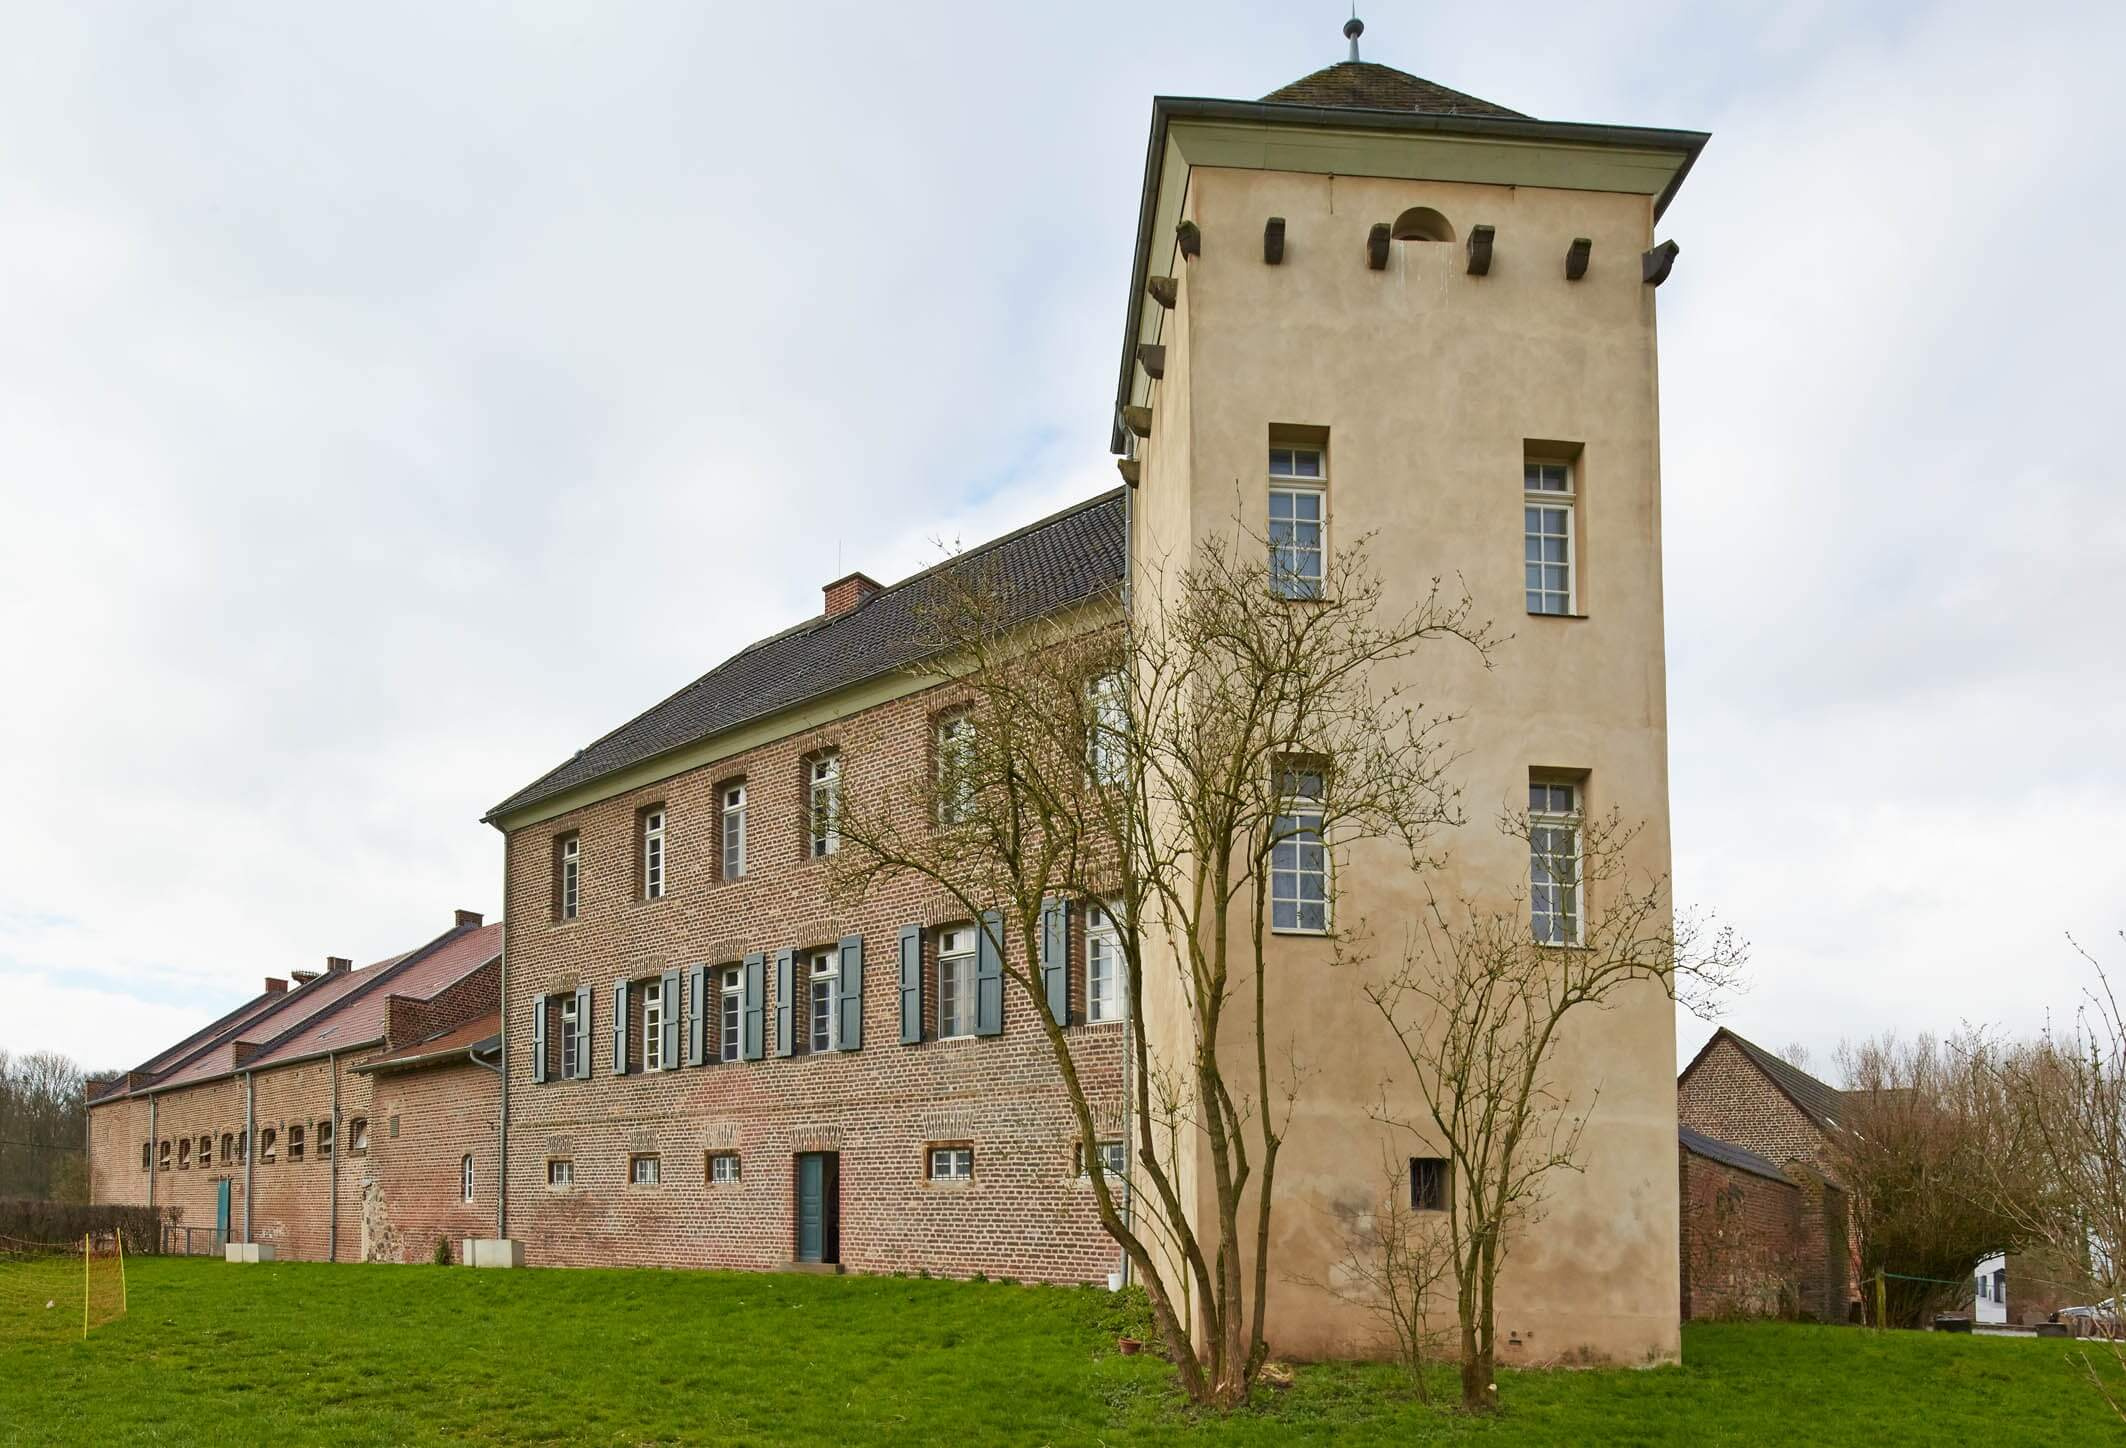 Photo of the late antique fortification "Haus Bürgel" in Monheim am Rhein.